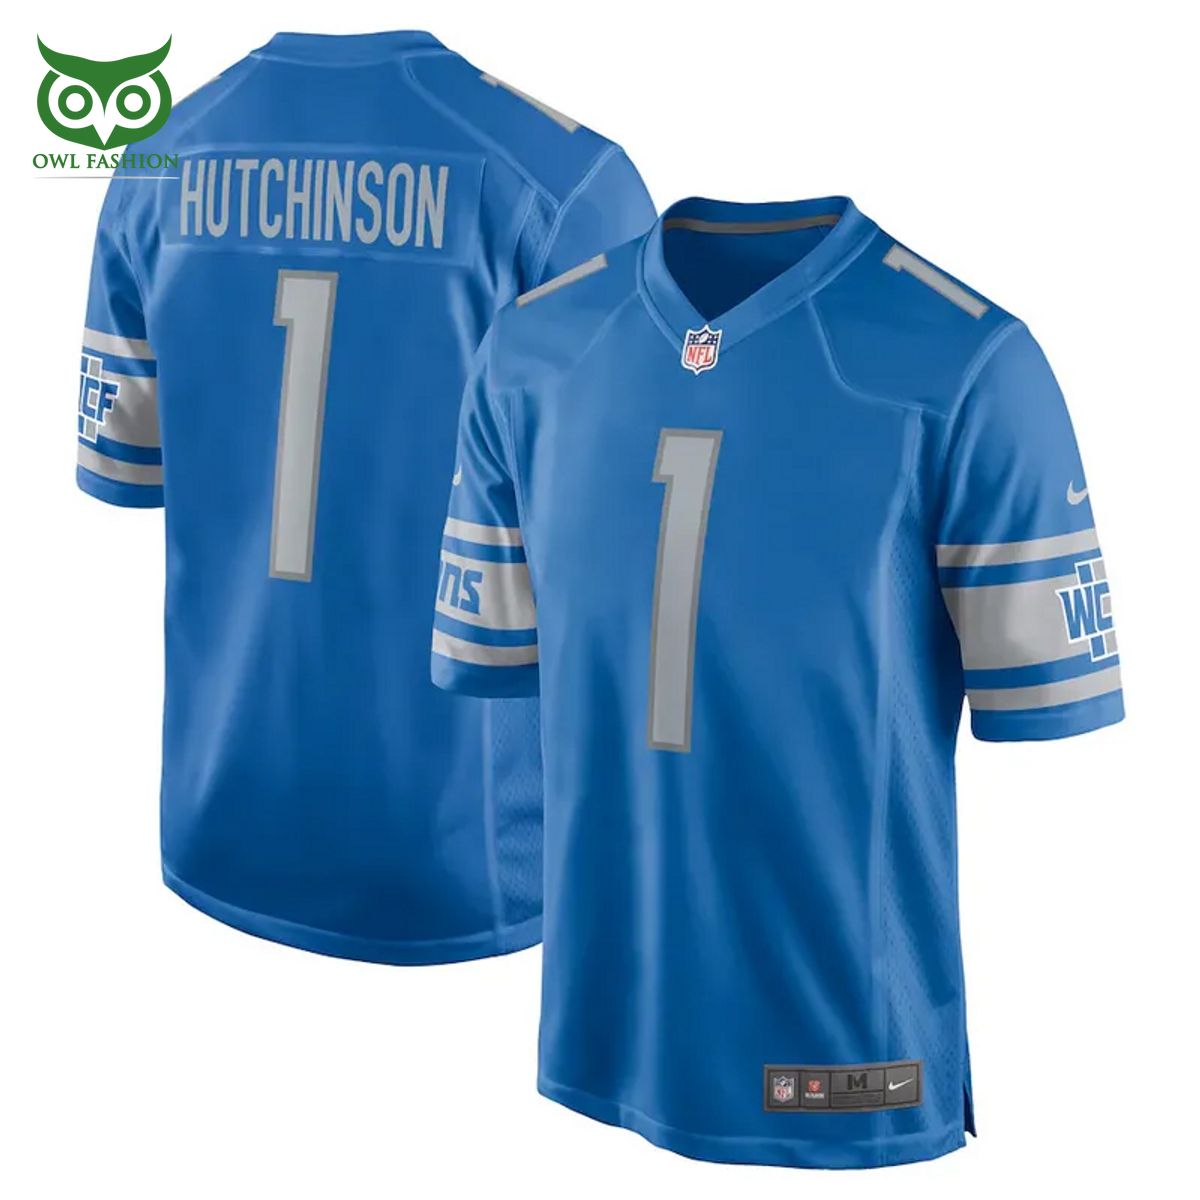 hutchinson detroit lions nfl baseball jersey shirt 1 qgJvk